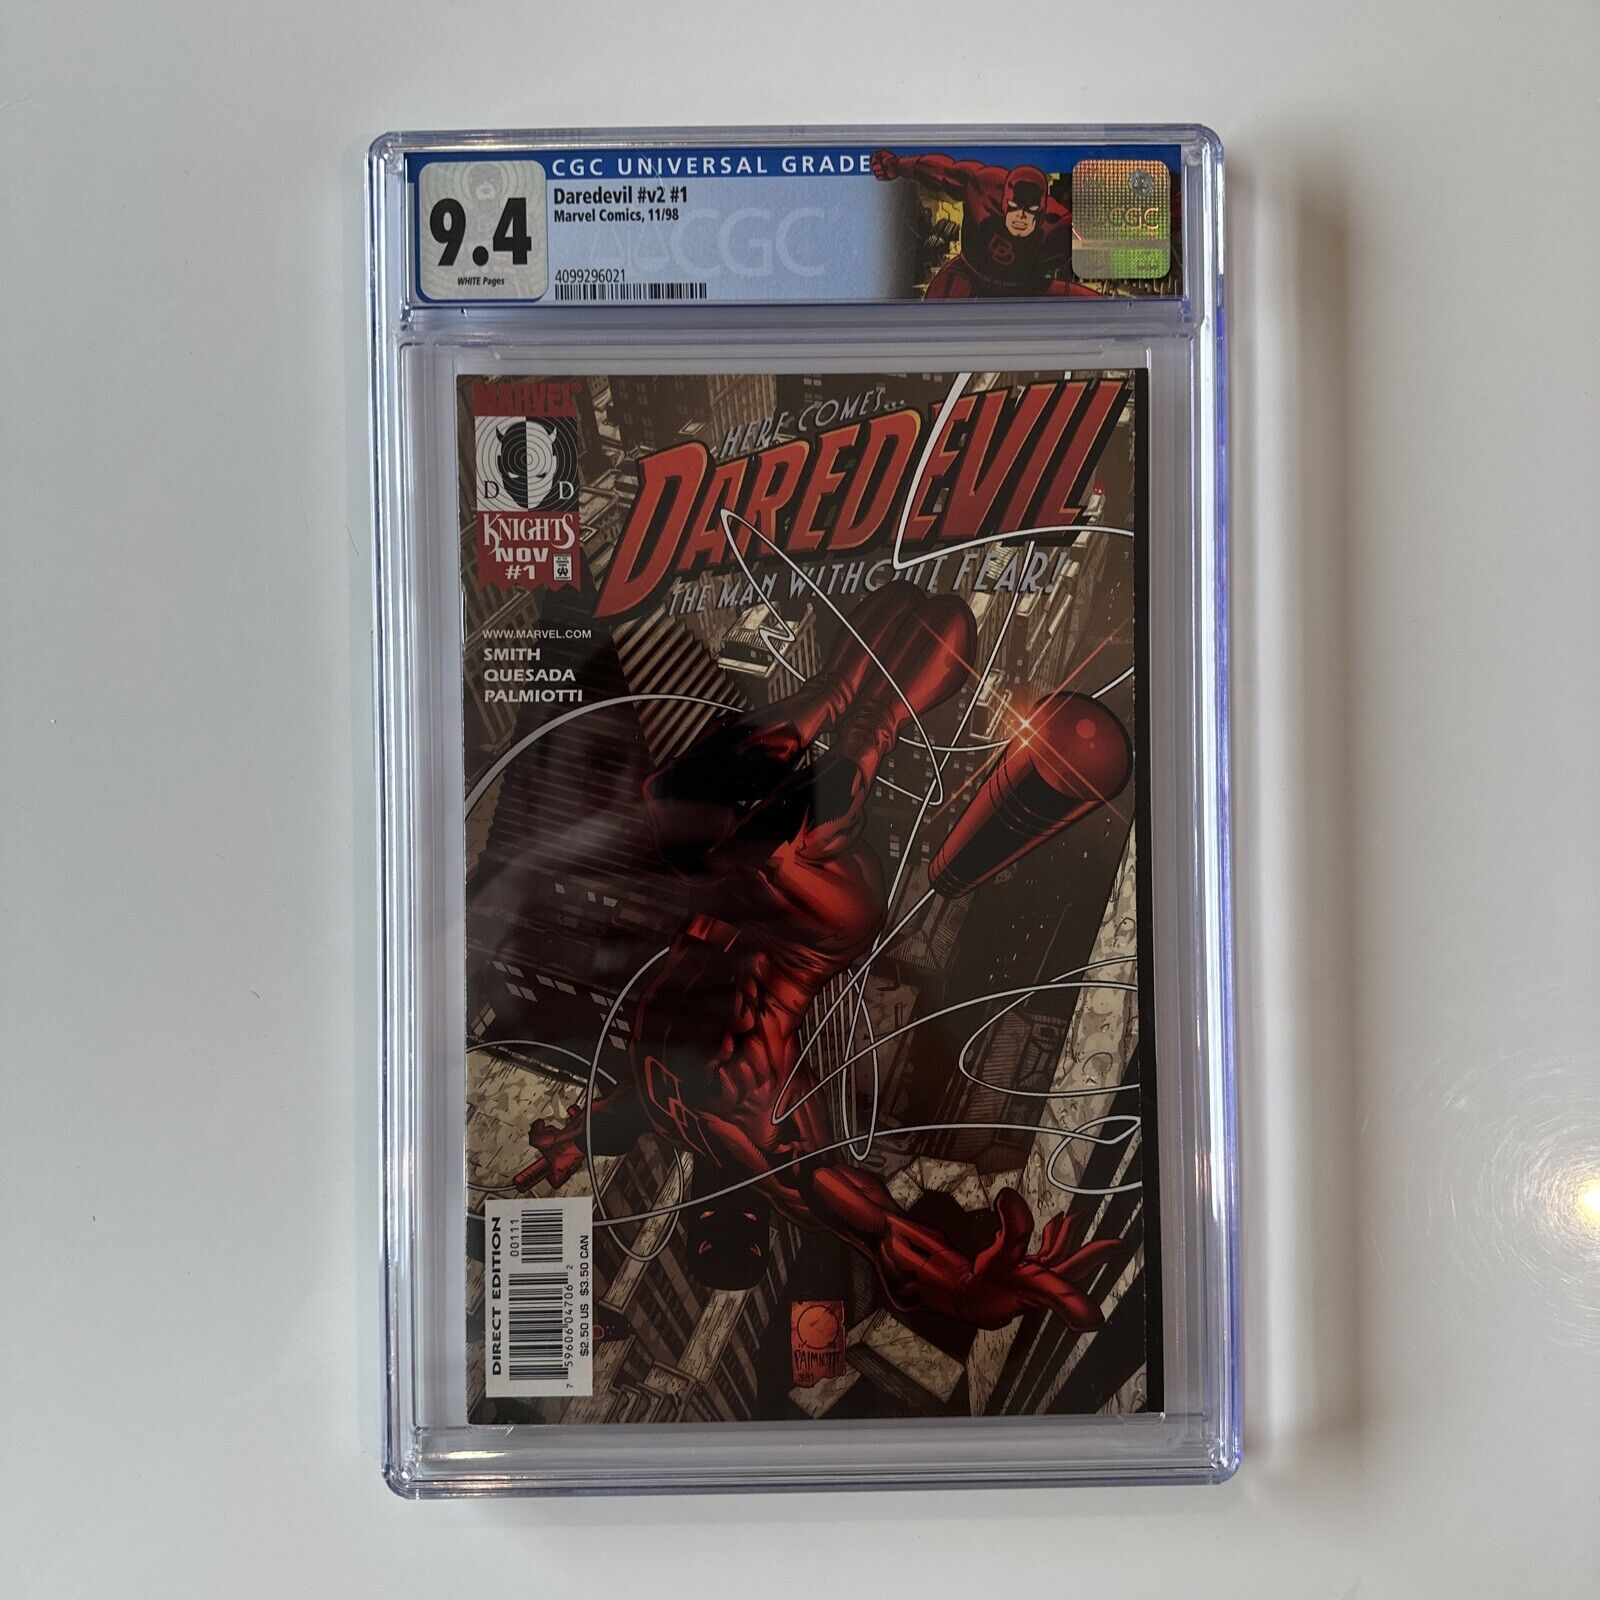 Daredevil #v2 #1 CGC 9.4 Kevin Smith CUSTOM LABEL Marvel Knights JOE QUESADA